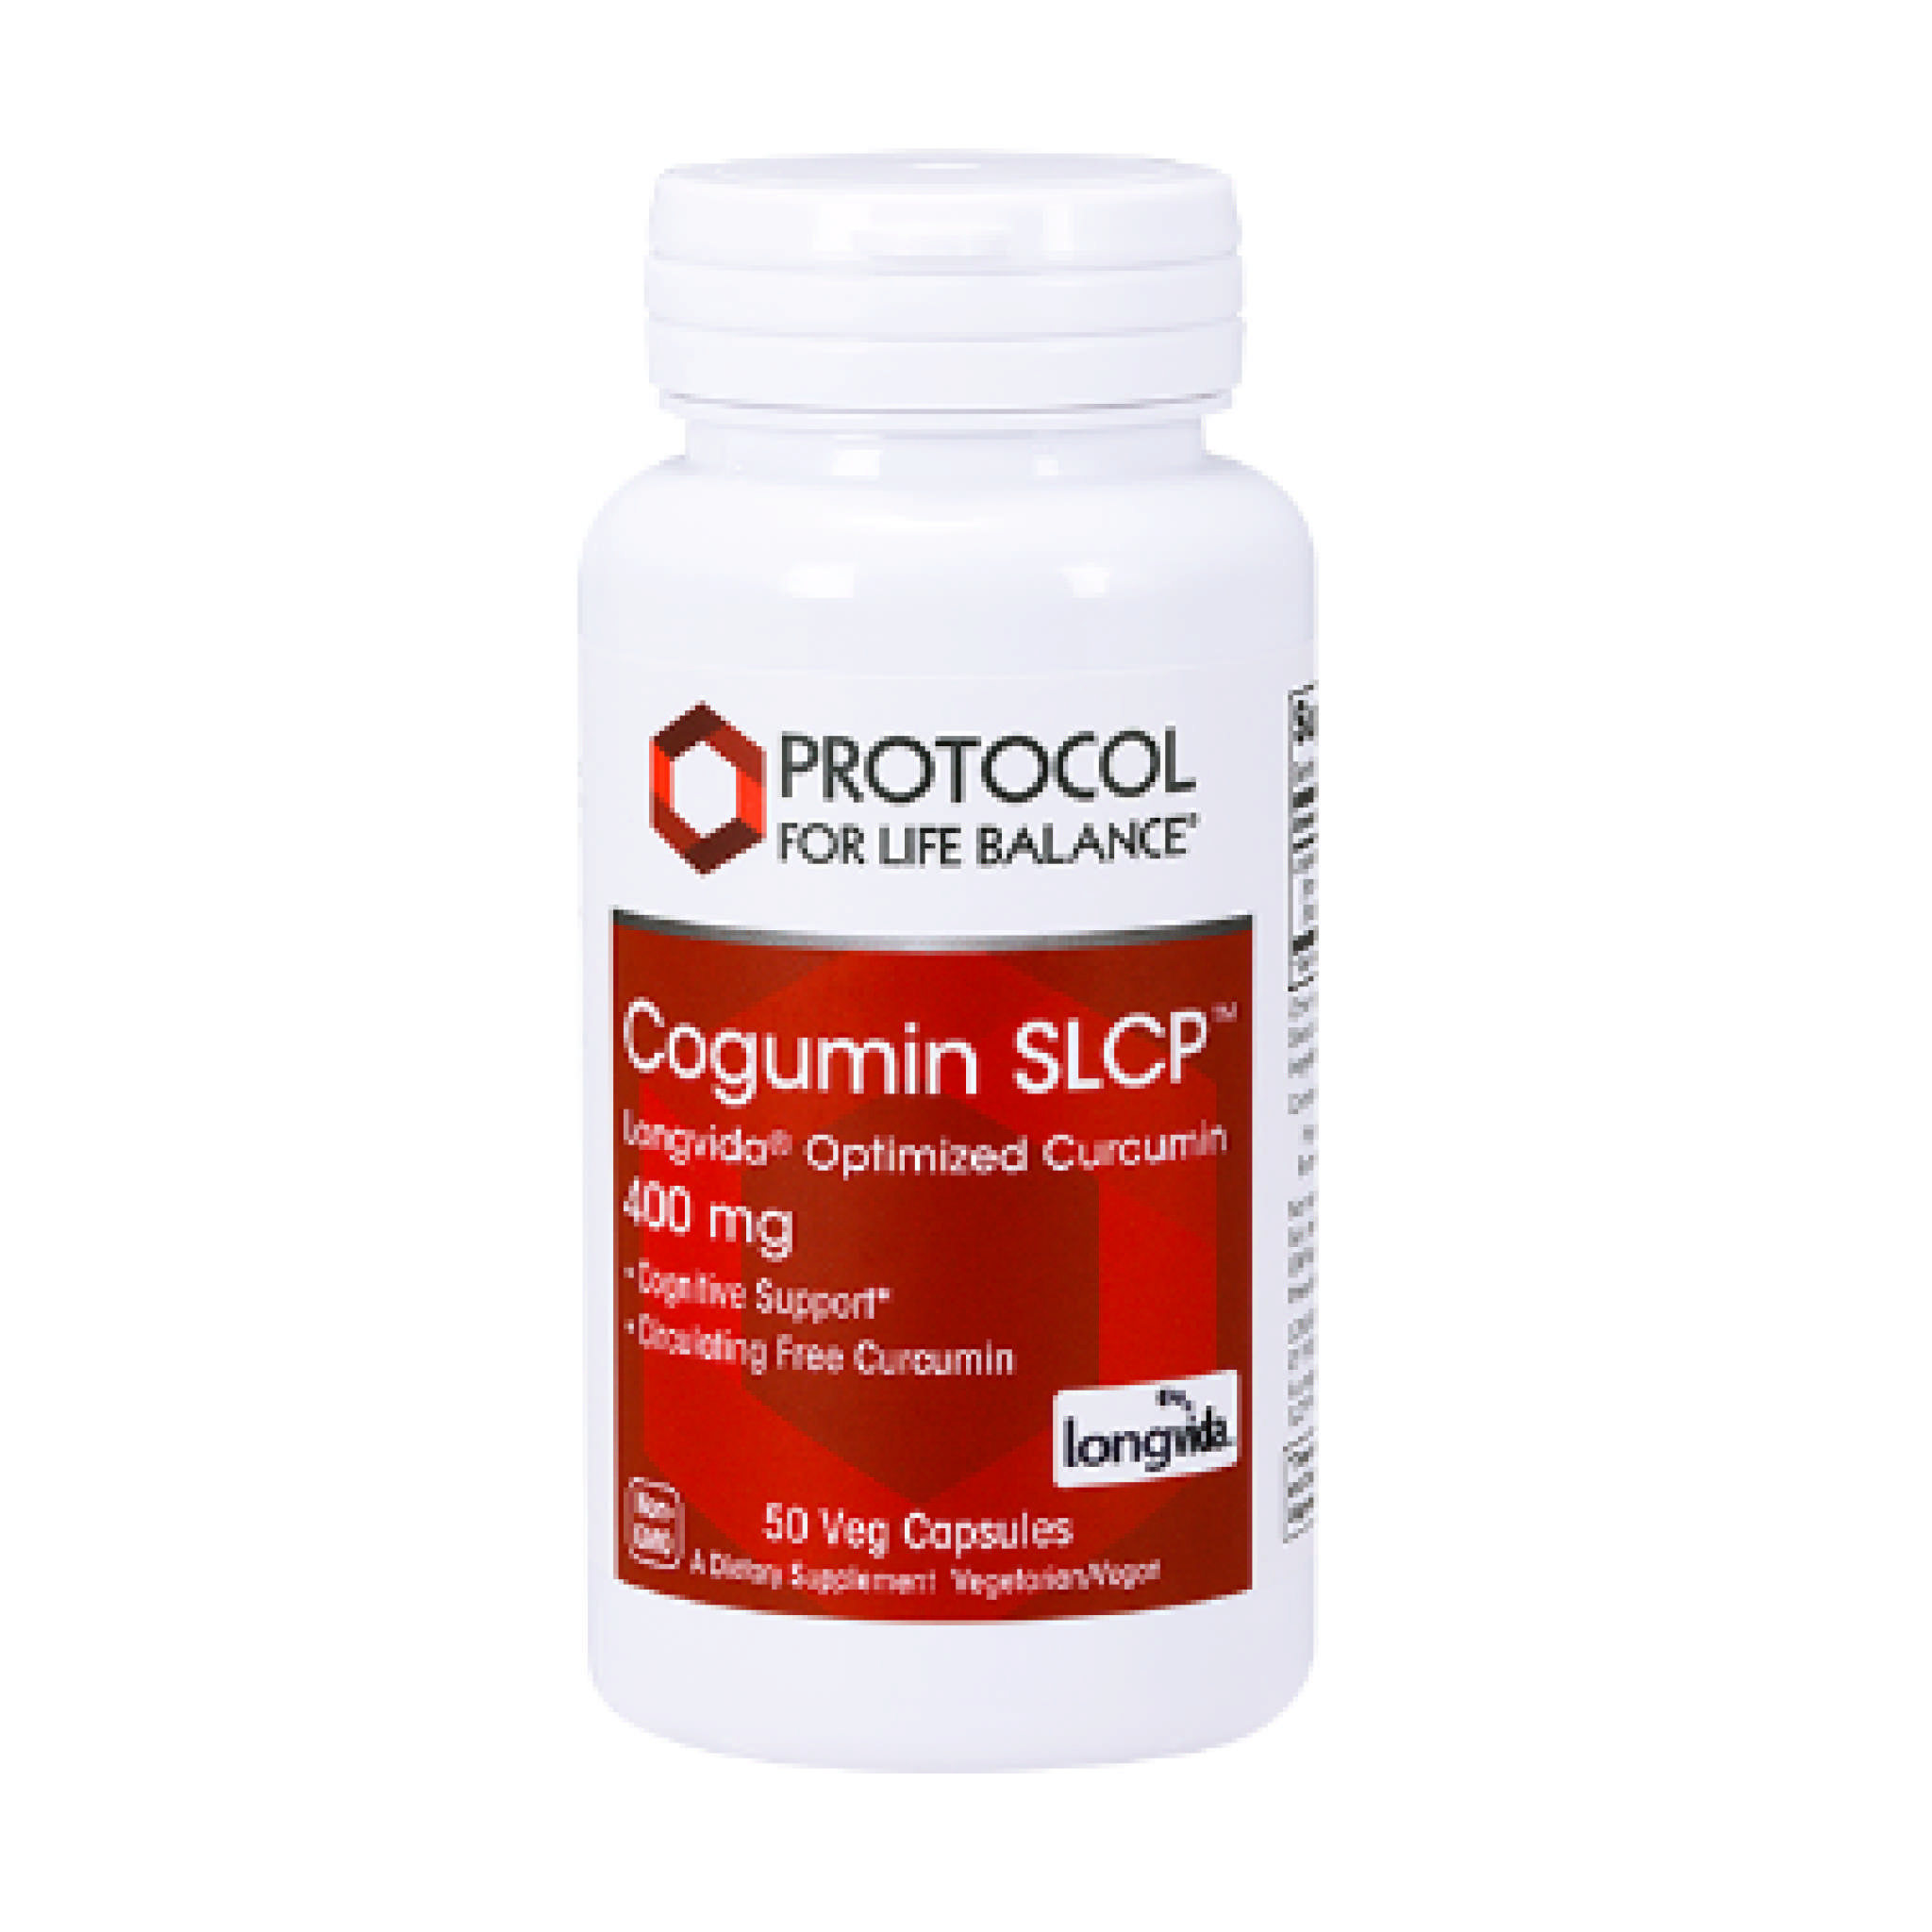 Protocol For Life Balance - Cogumin Sclp Curcumin 400 mg